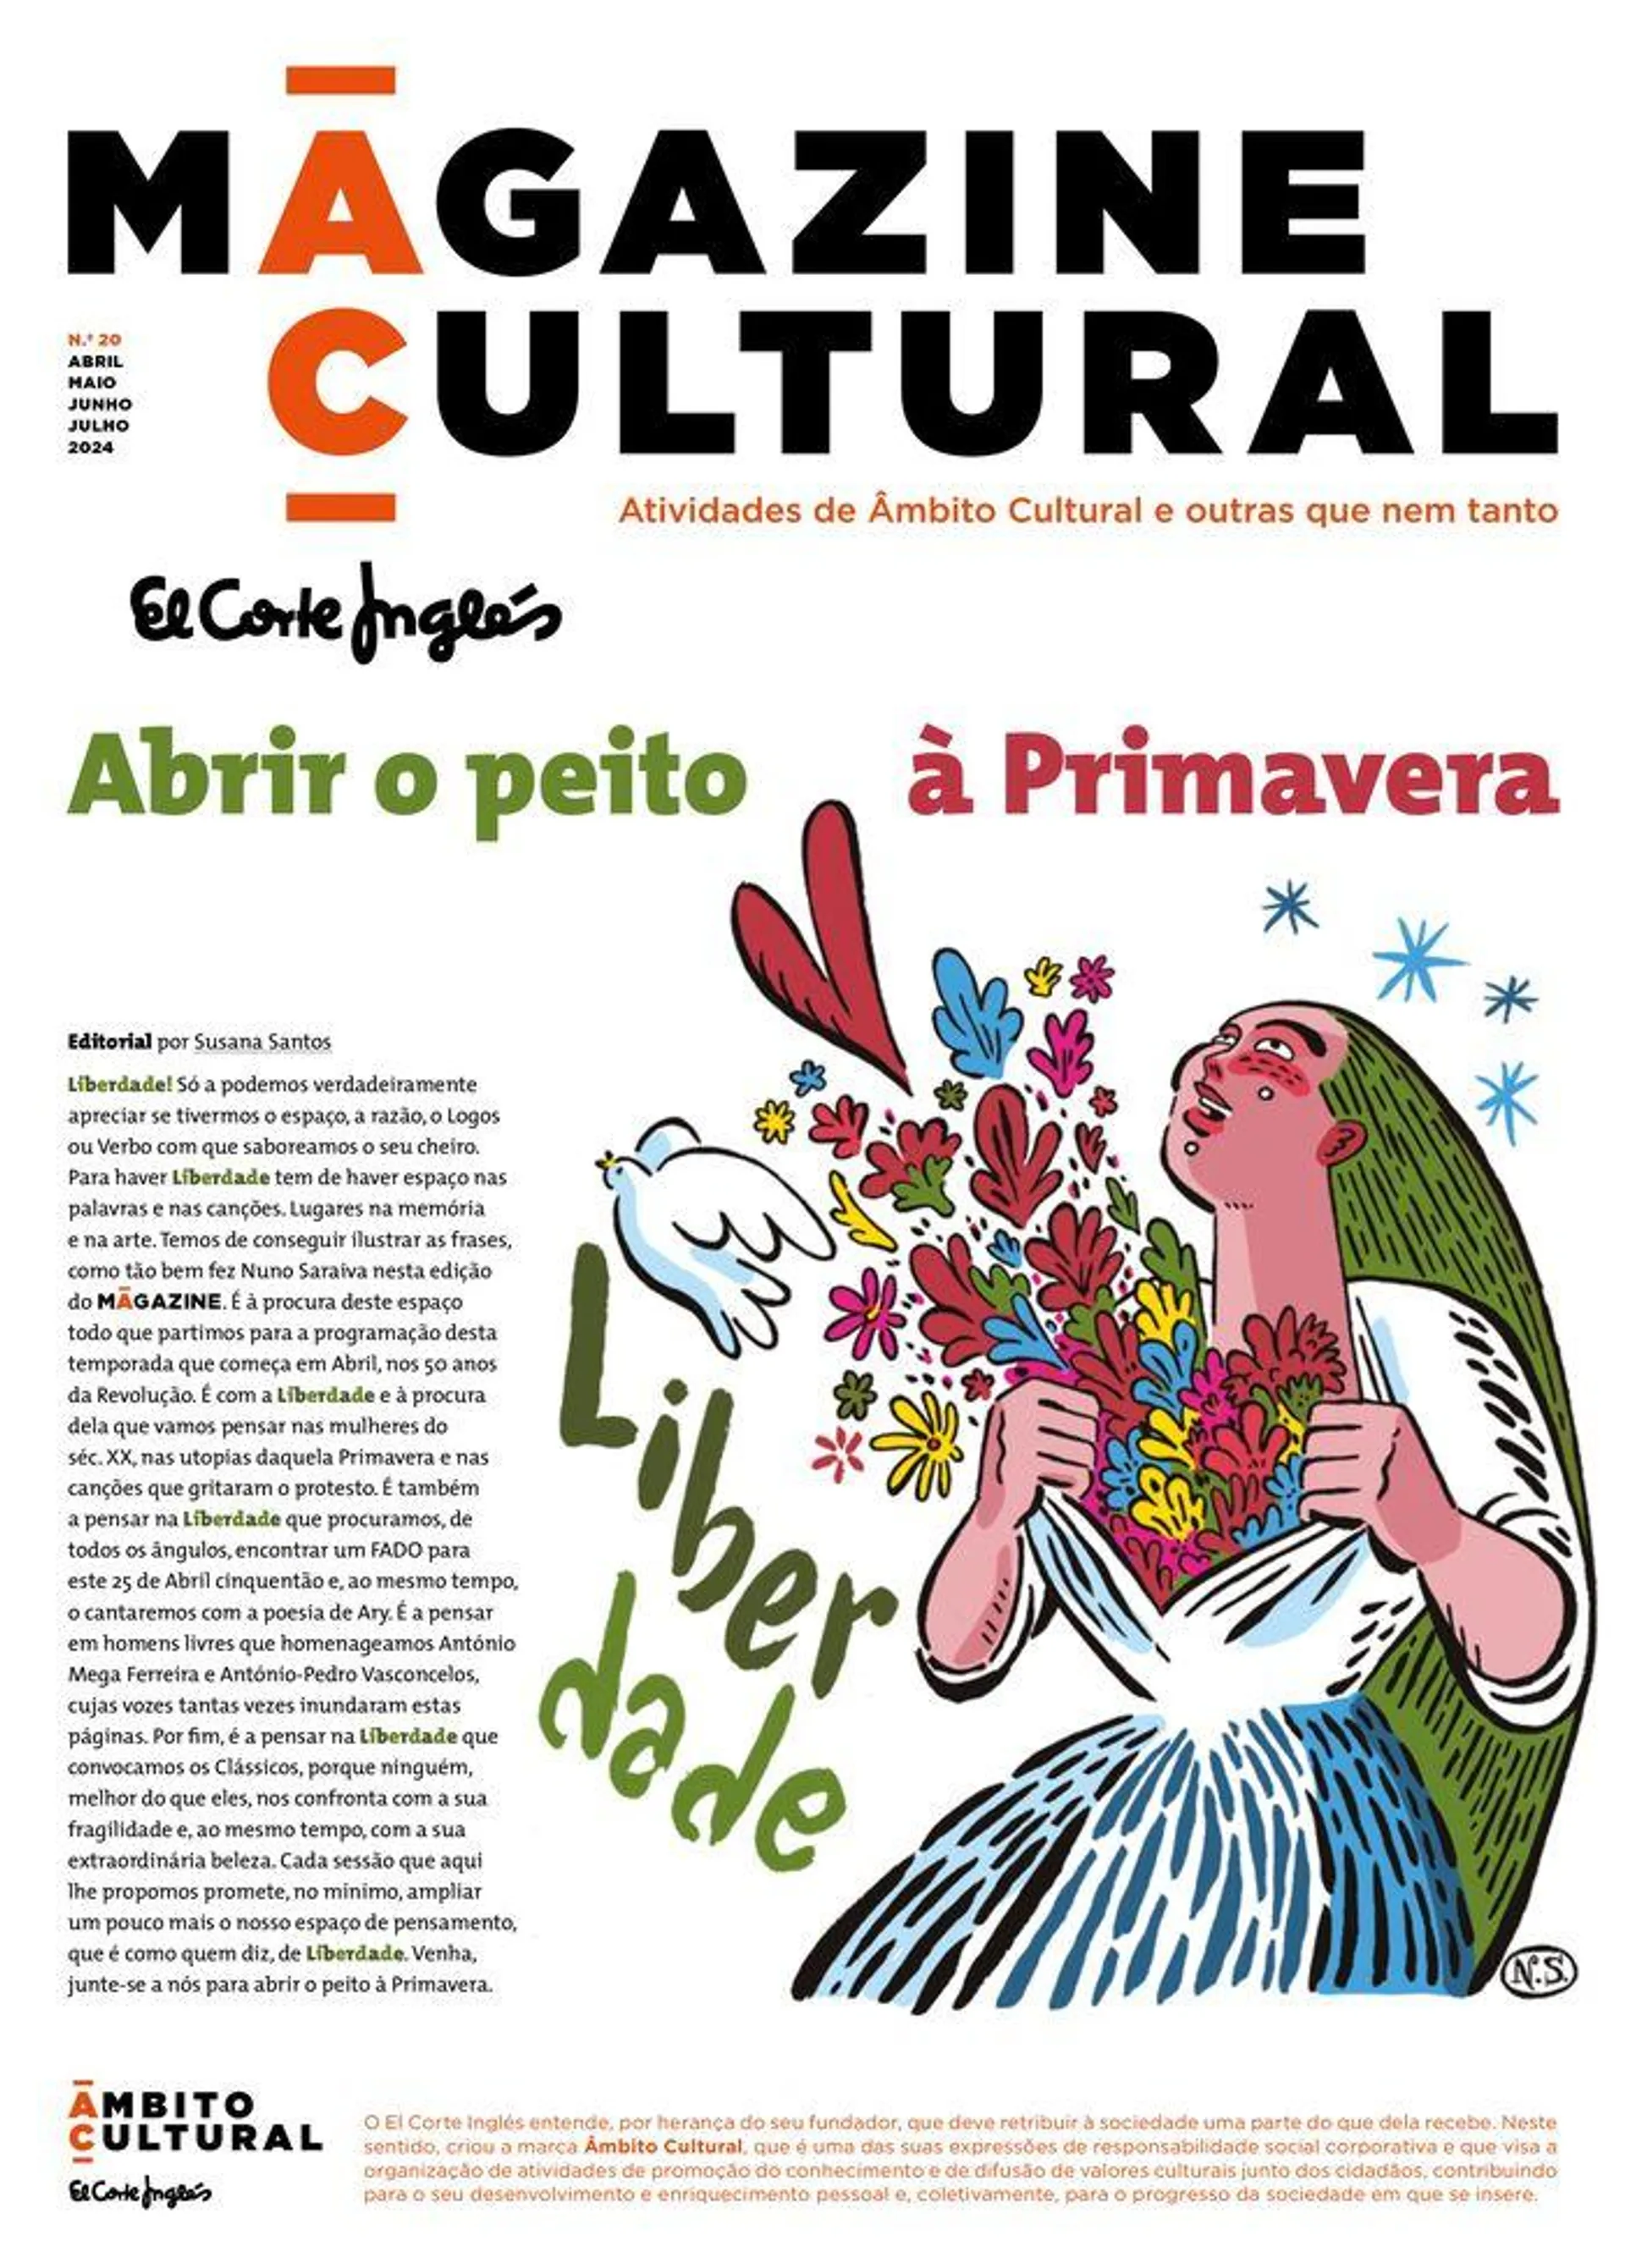 Magazine Cultural - 1